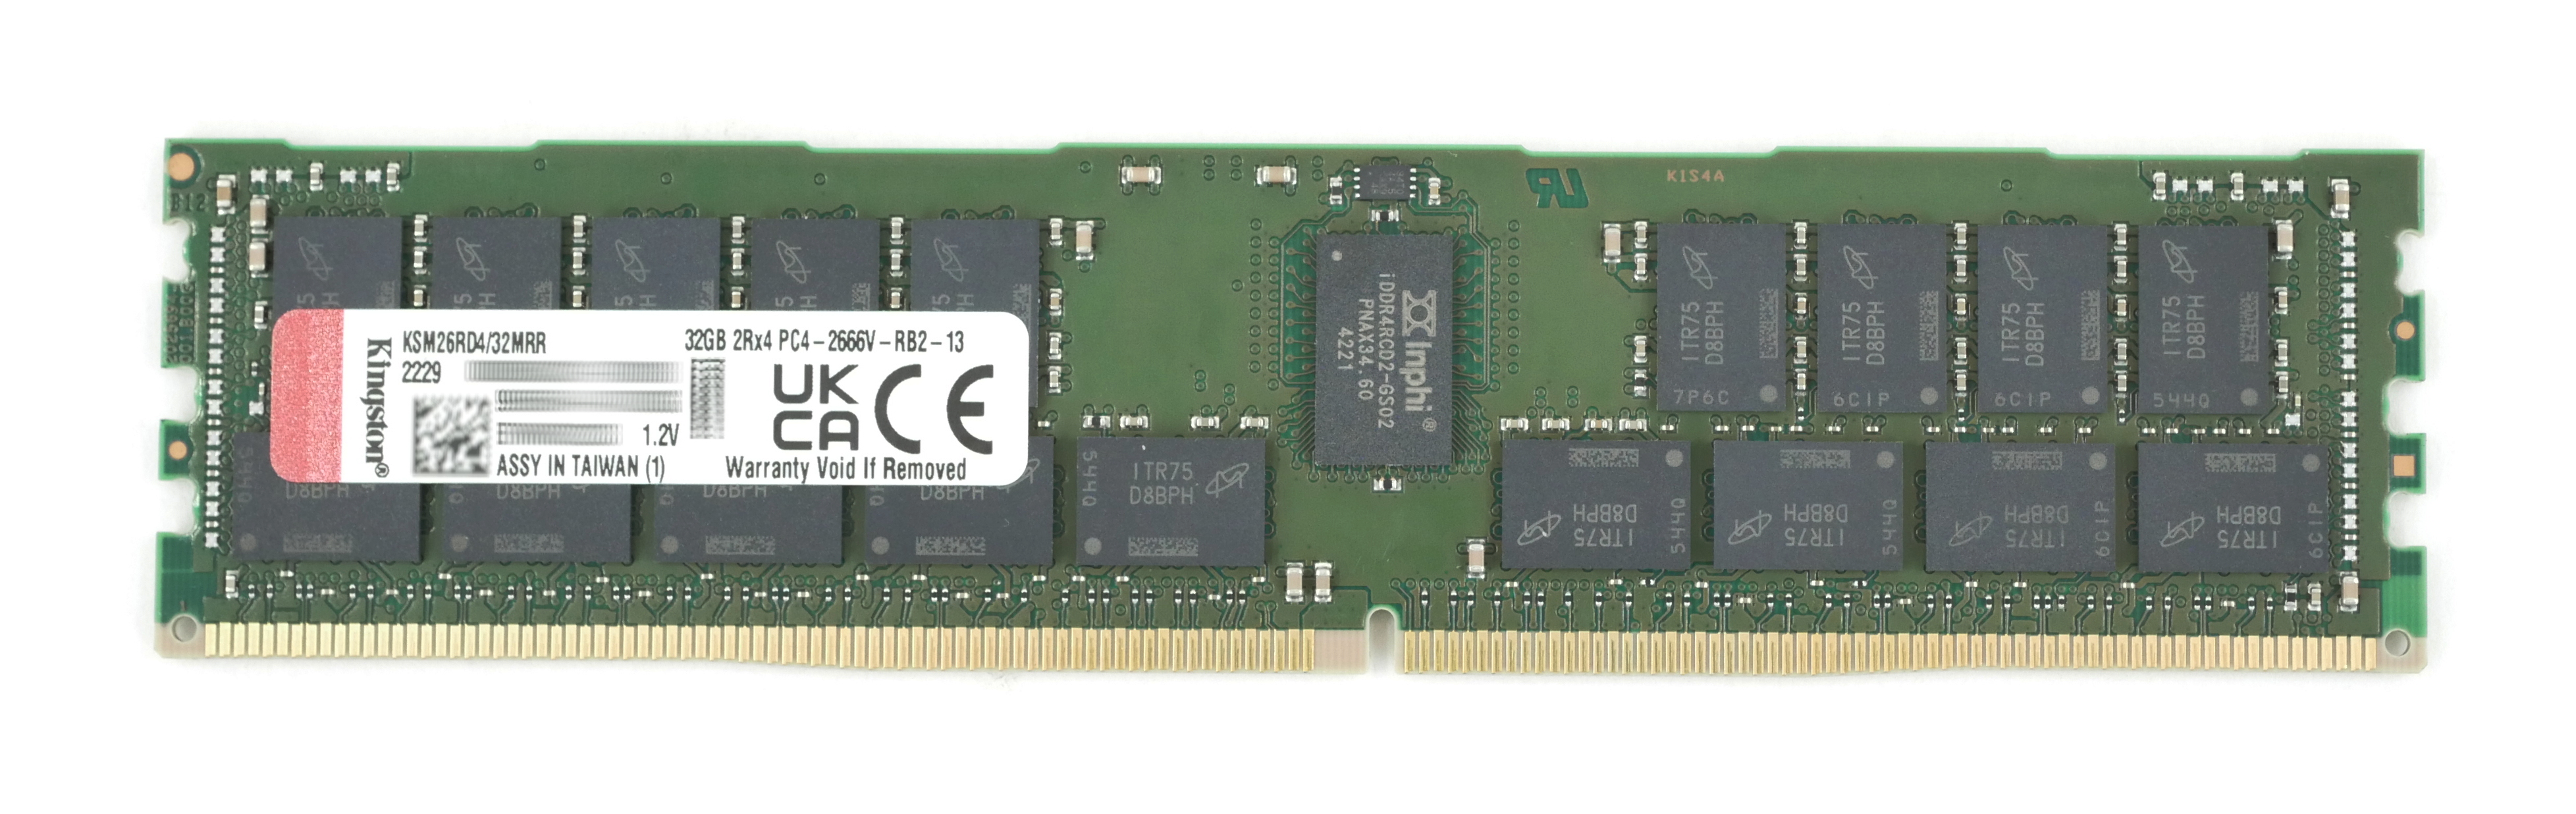 Kingston 32GB DDR4 2666MHz PC4-21300 RDIMM 288 Pin ECC REG KSM26RD4/32MRR